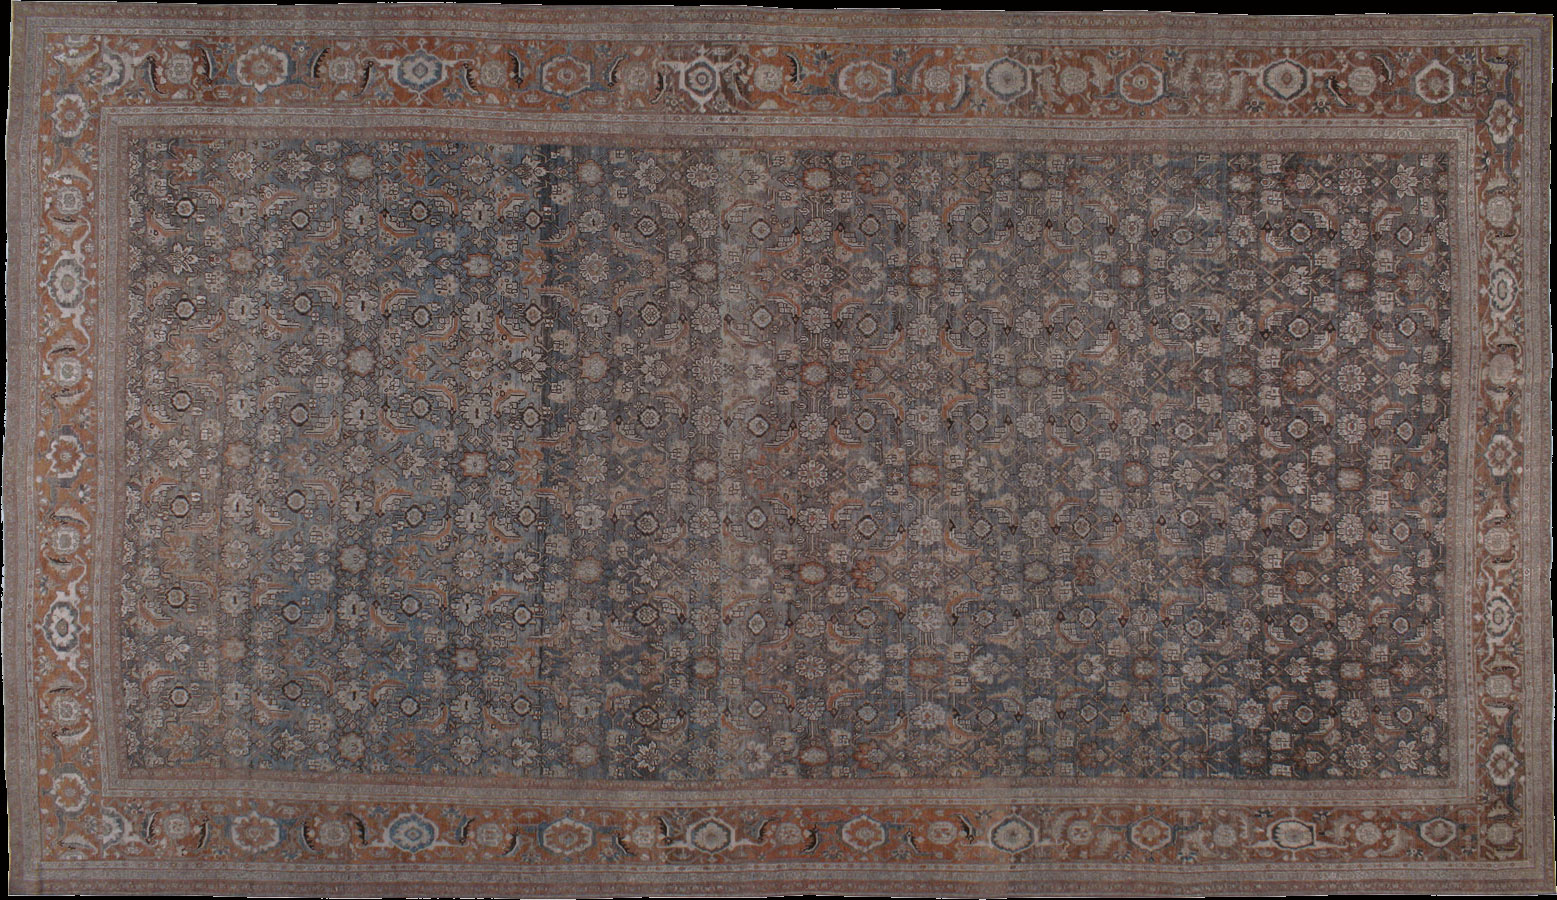 Antique bibi kabad Carpet - # 11223